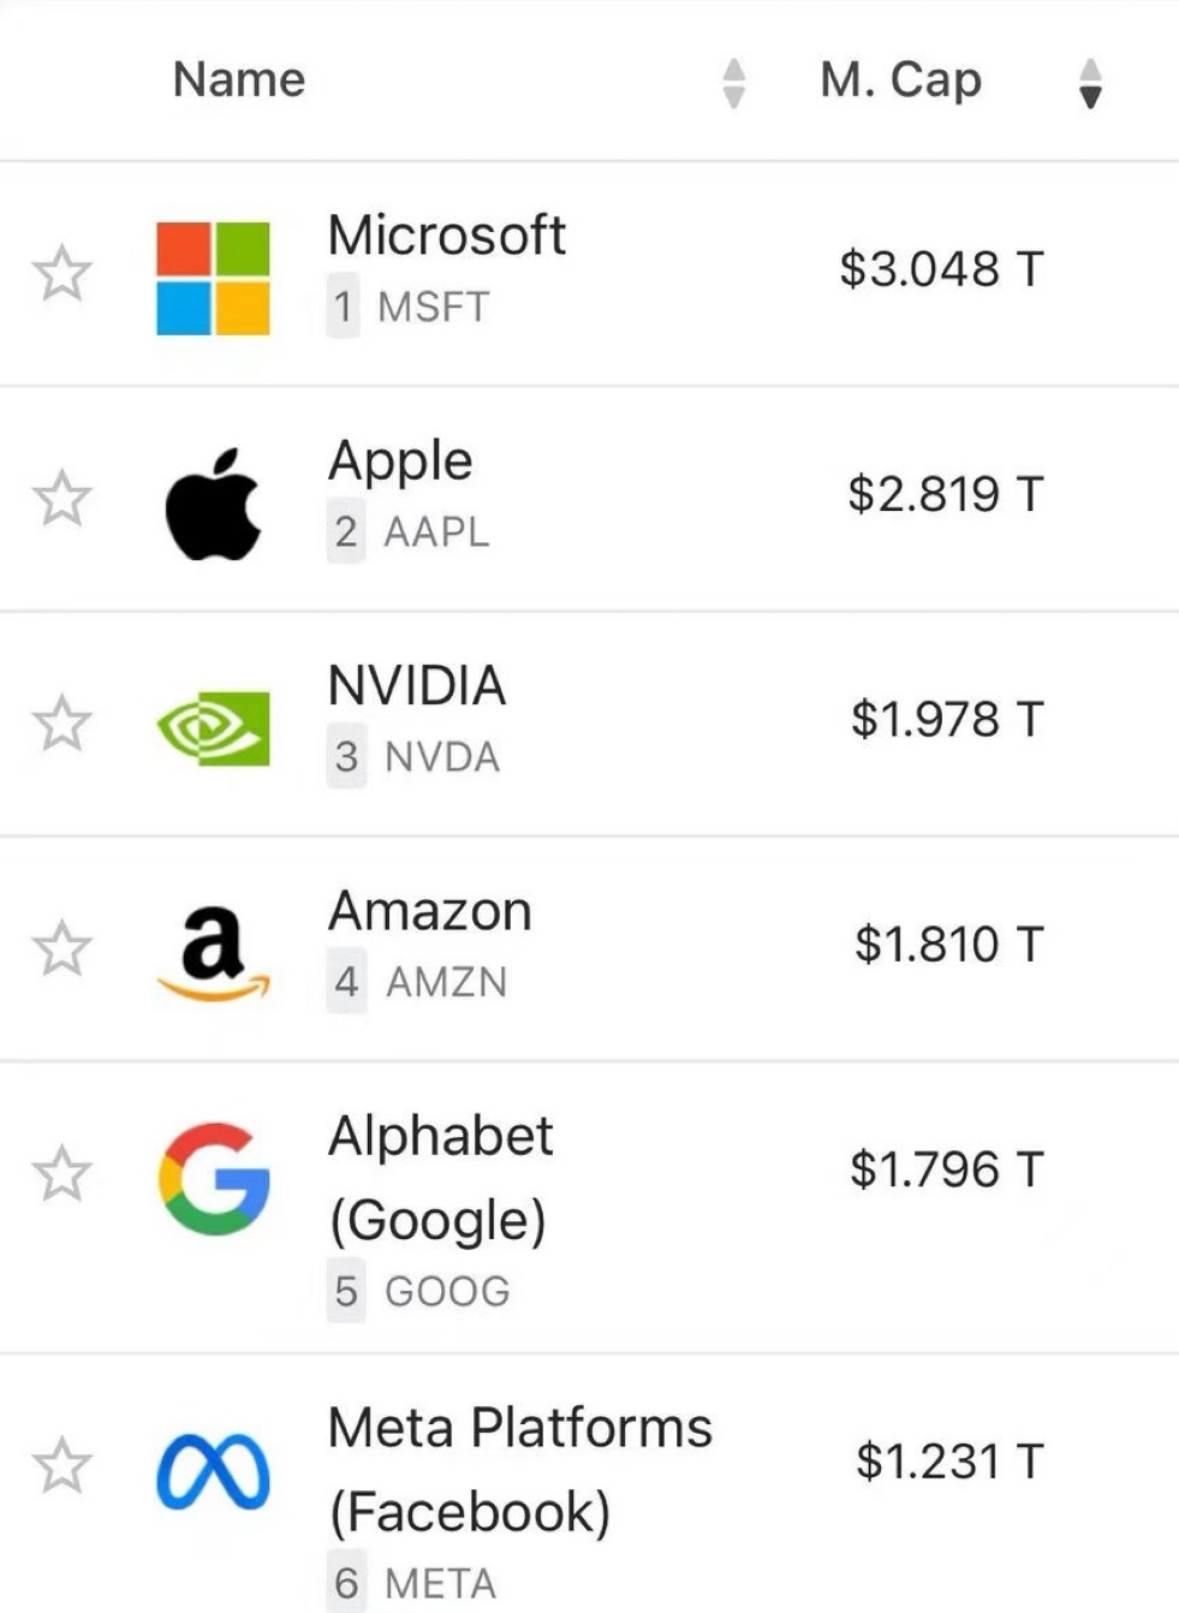 Nvidia's Market Cap Jumps $277 Billion, Becomes 3rd Most Valuable US Company